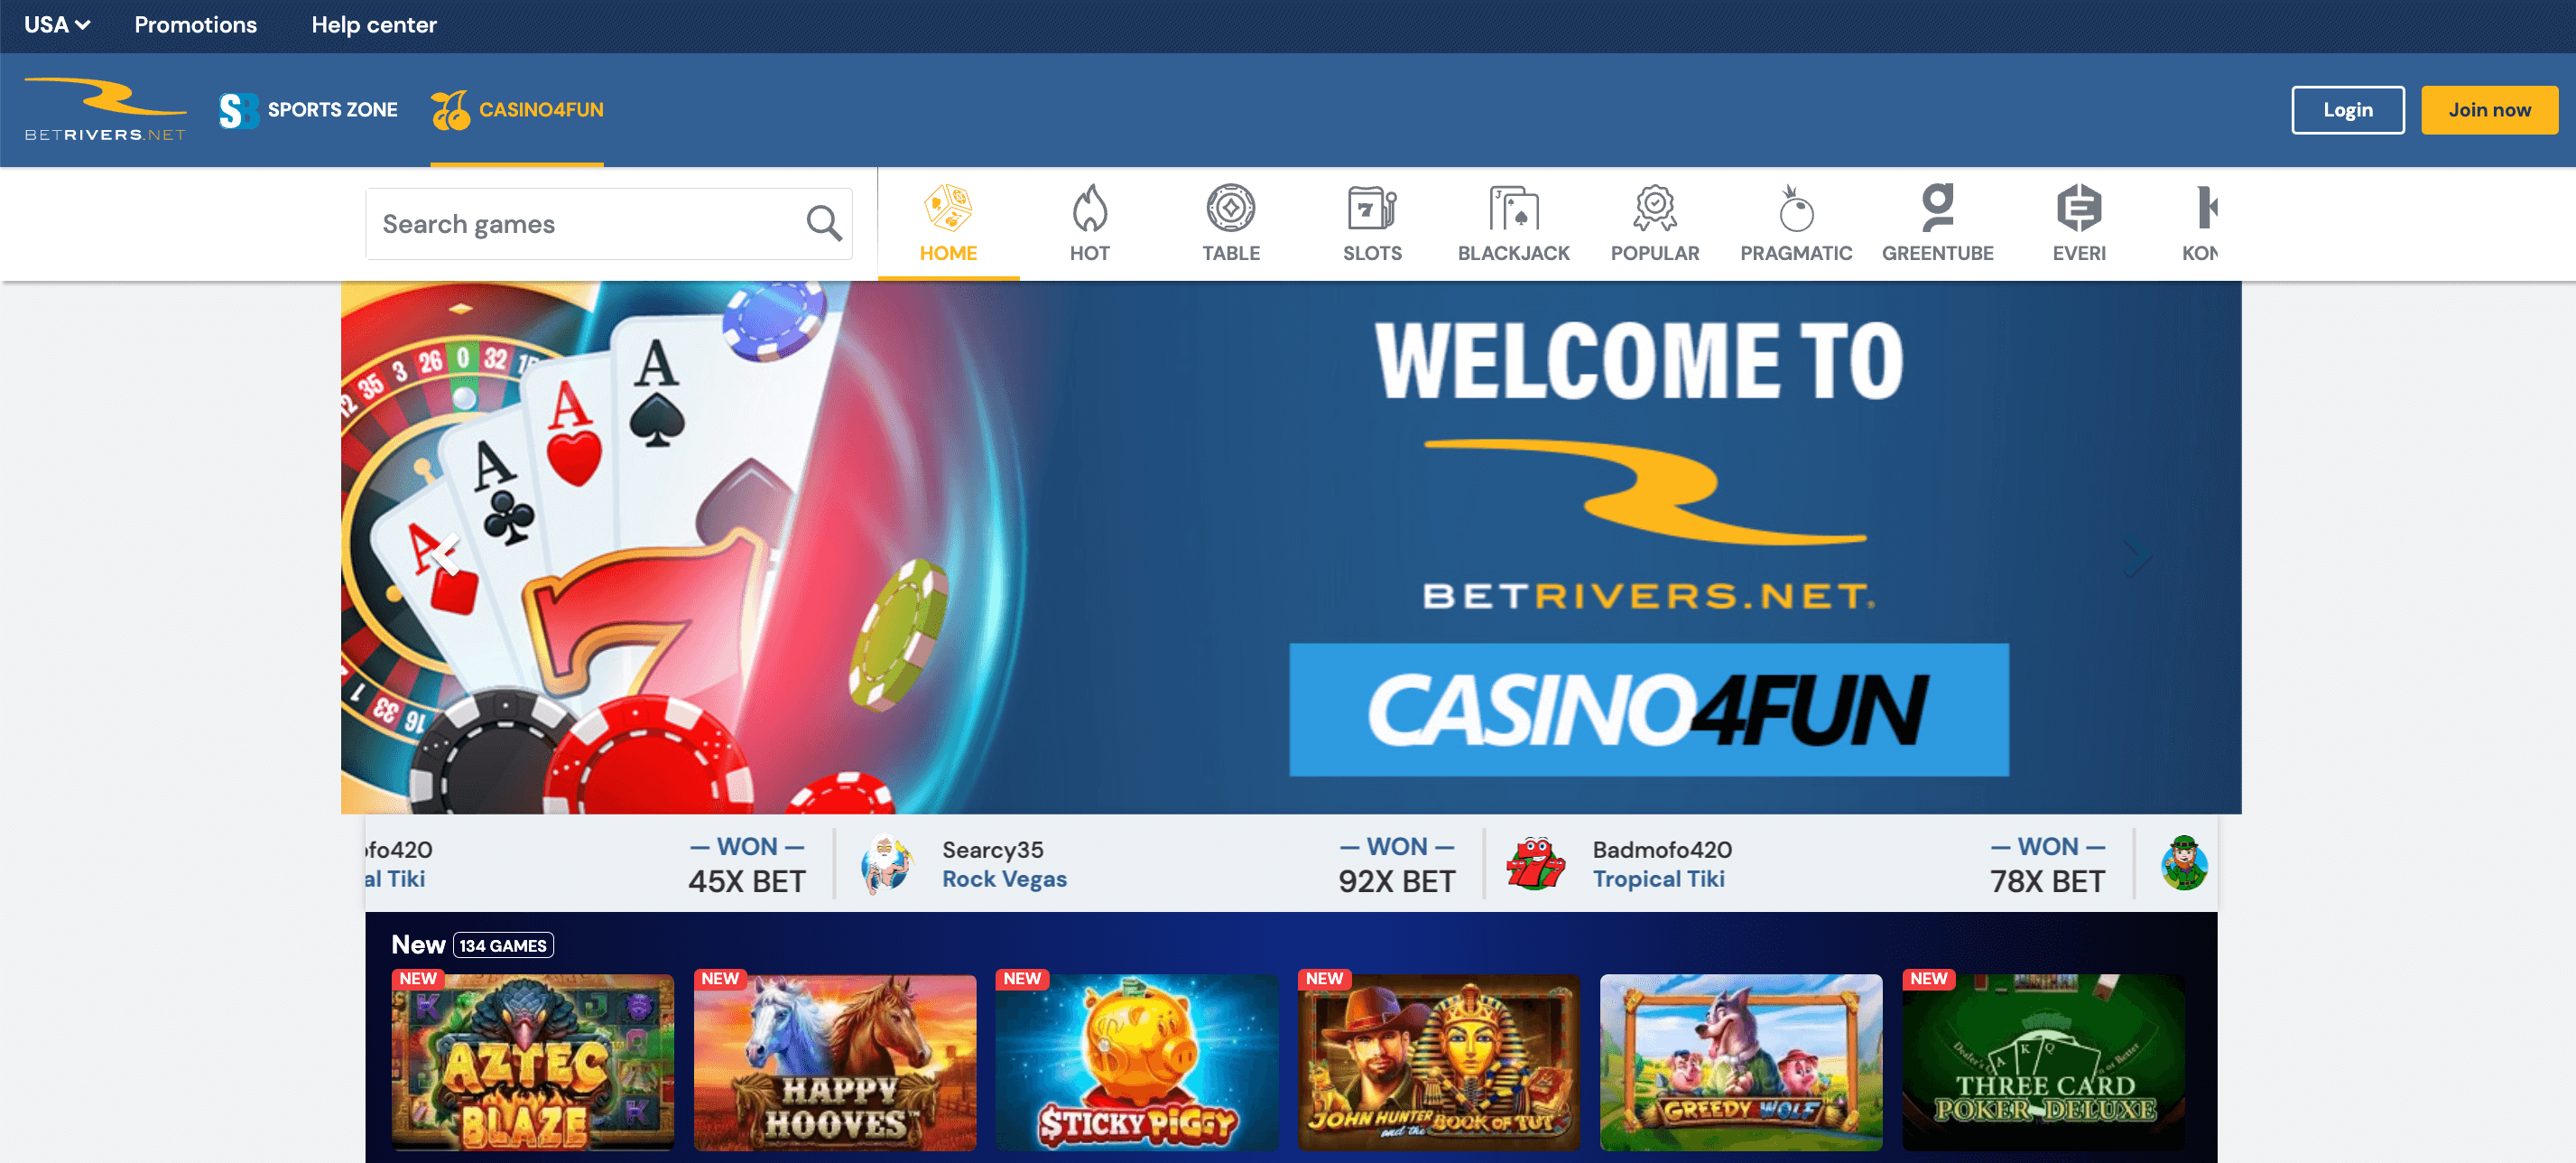 BetRivers Casino4Fun